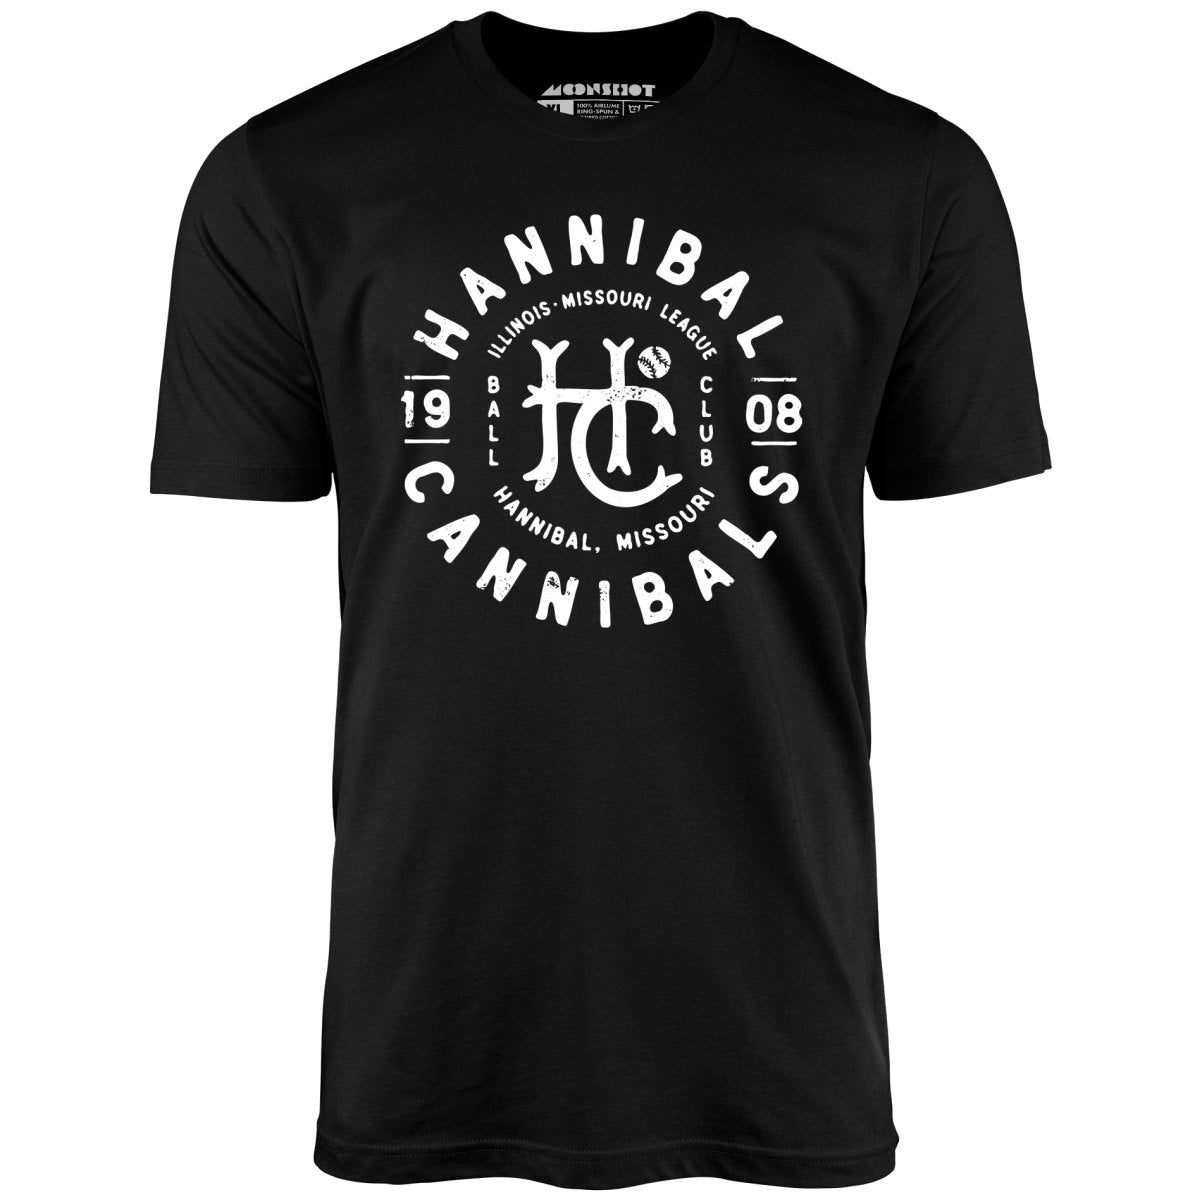 Hannibal Cannibals - Missouri - Vintage Defunct Baseball Teams - Unisex T-Shirt